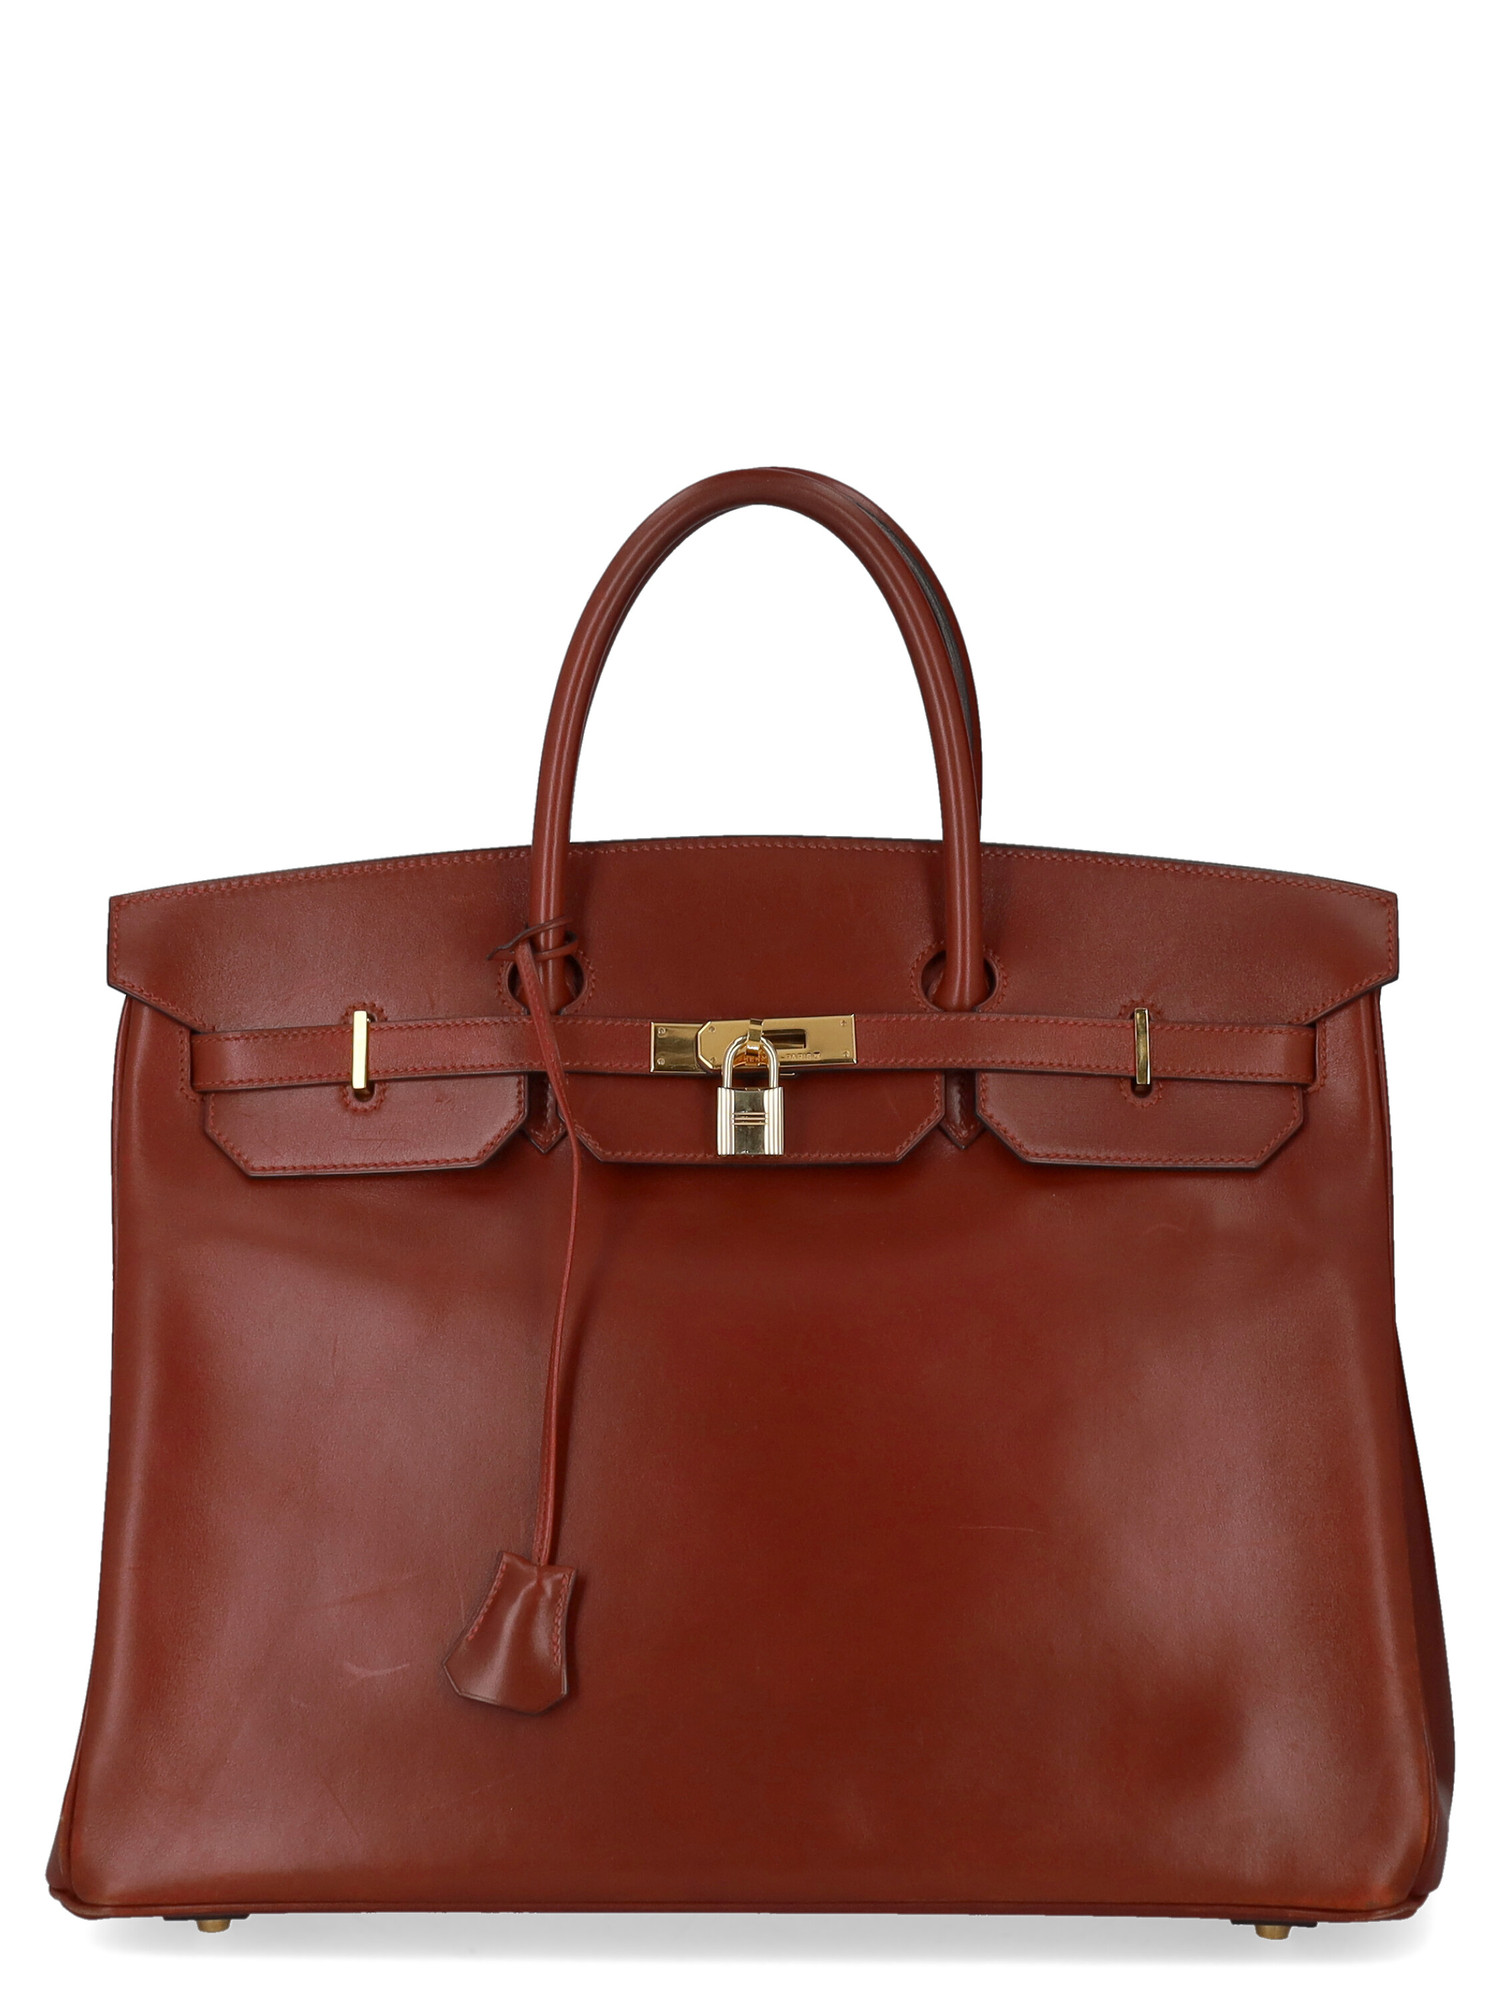 Pre-owned Hermes Women's Handbags - Hermès - In Red Leather